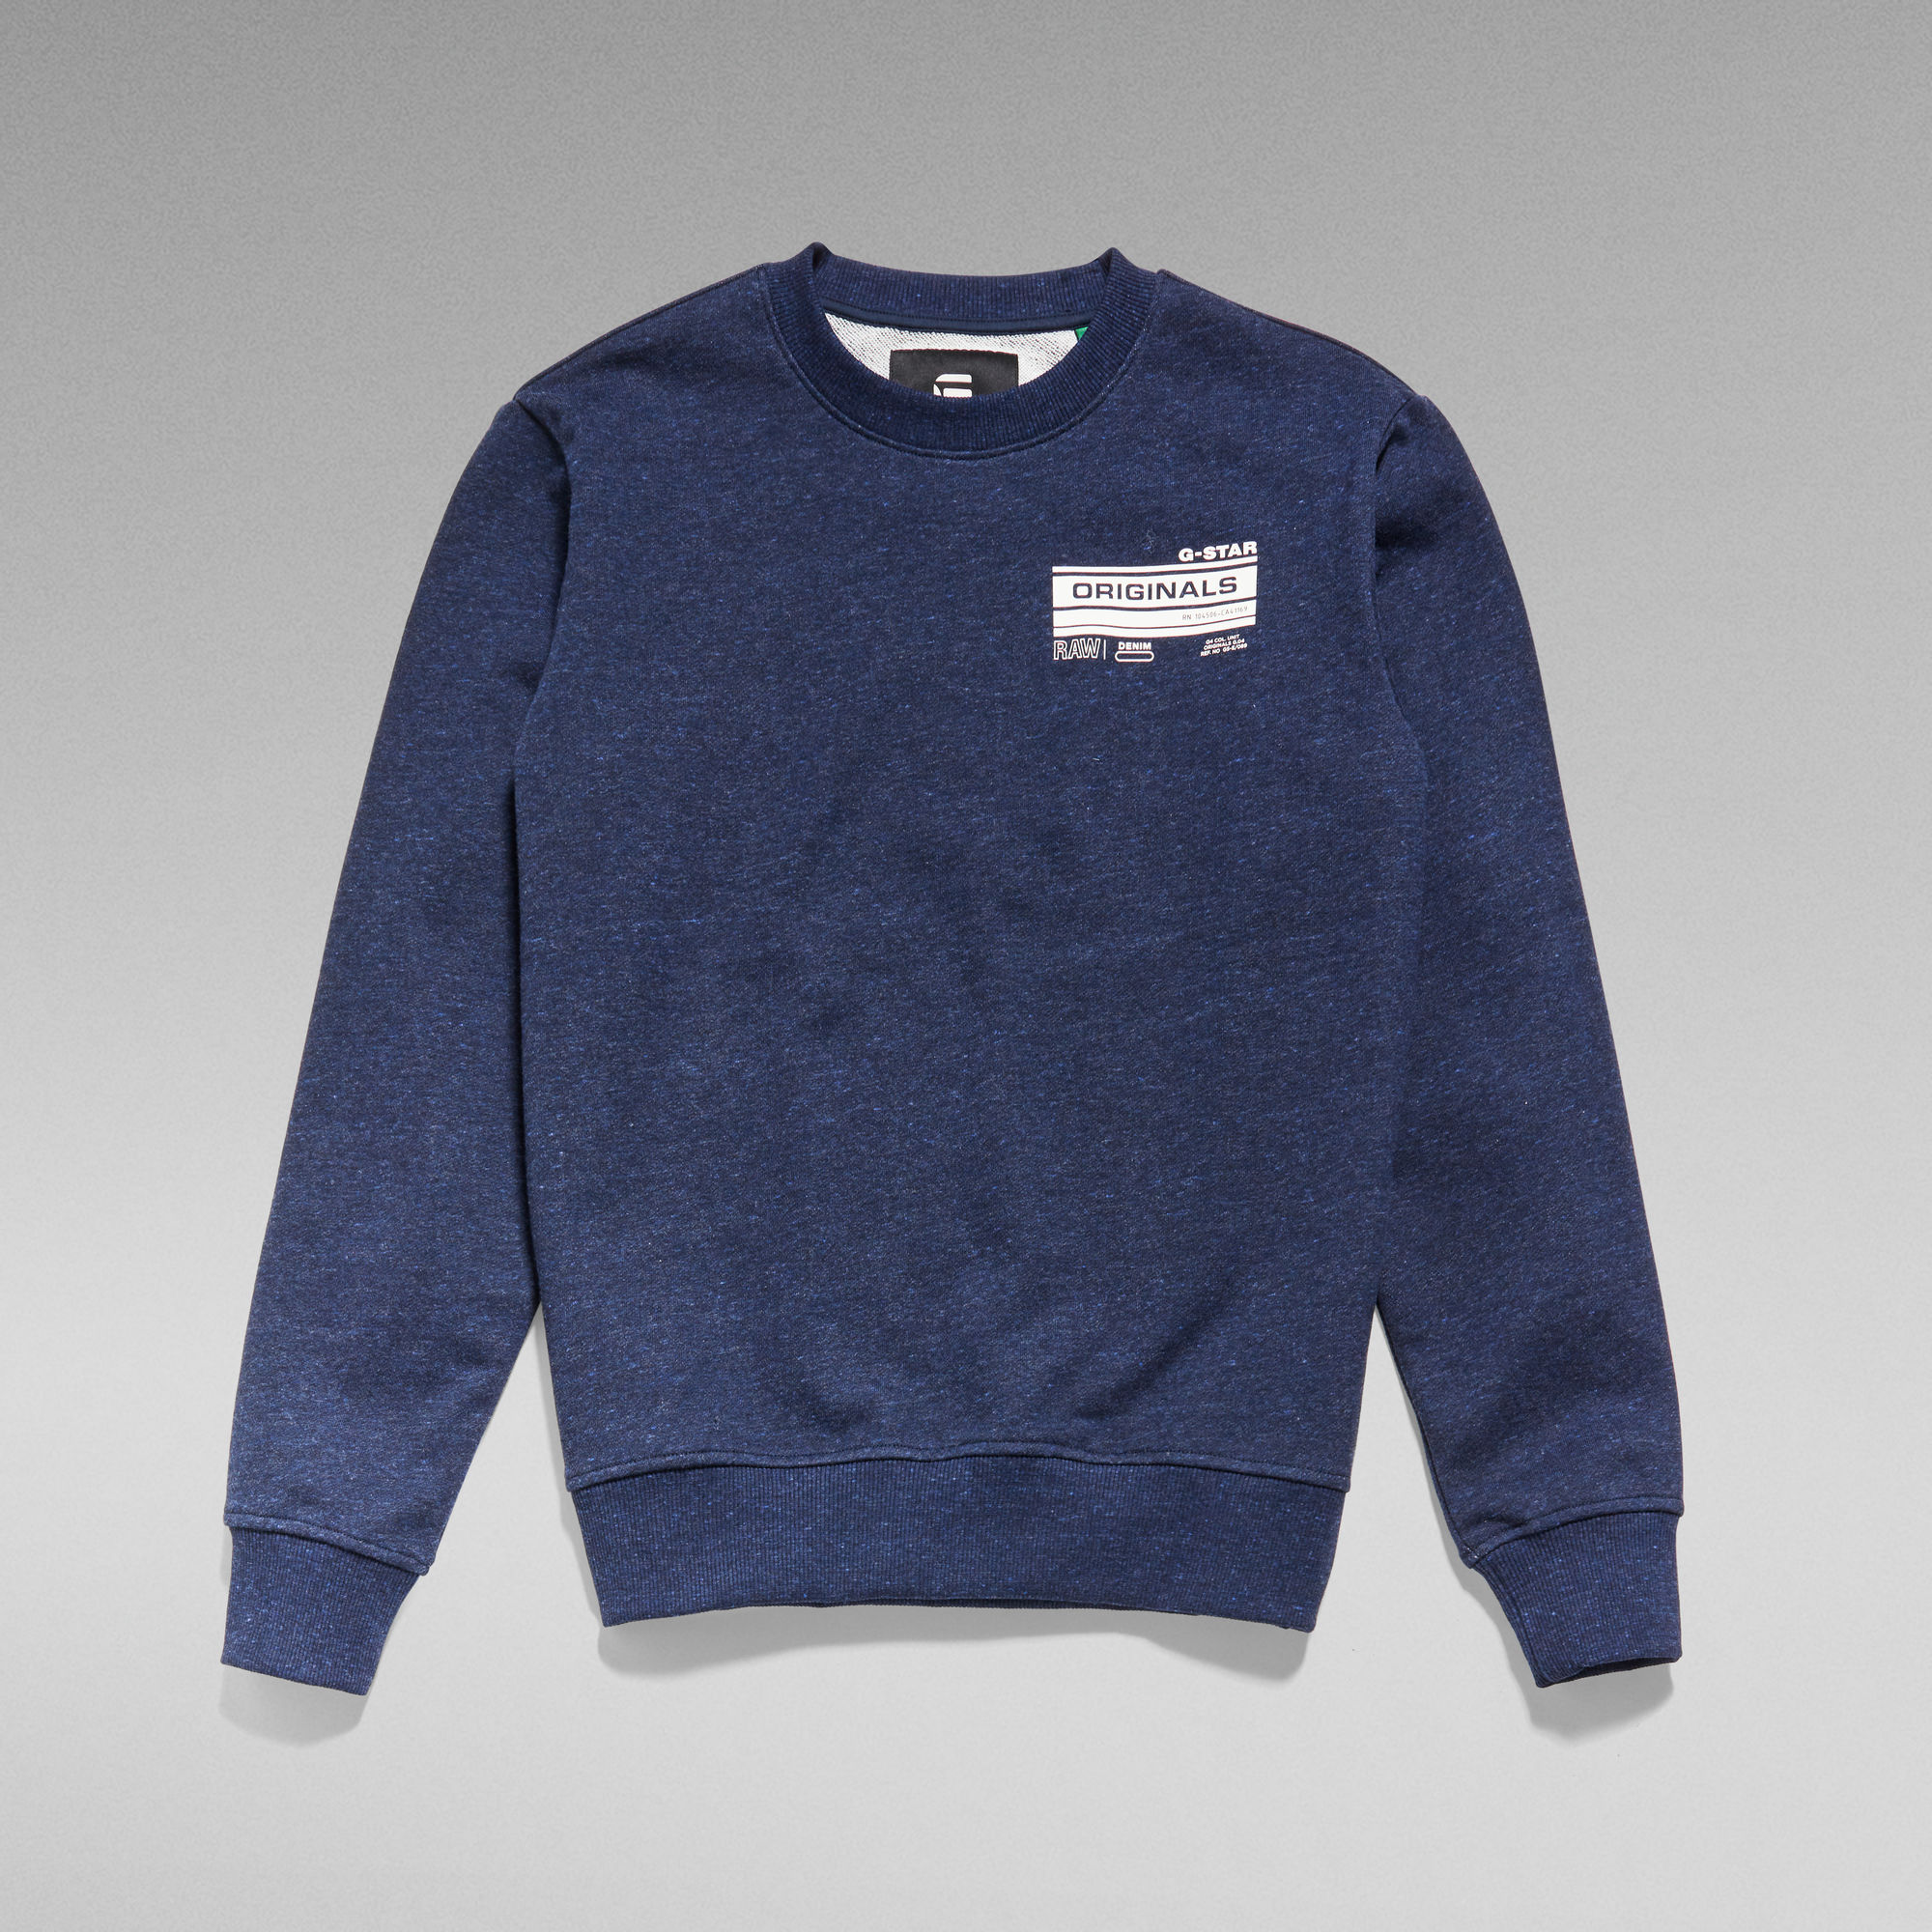 Originals Graphic Sweater | Multi color | G-Star RAW®